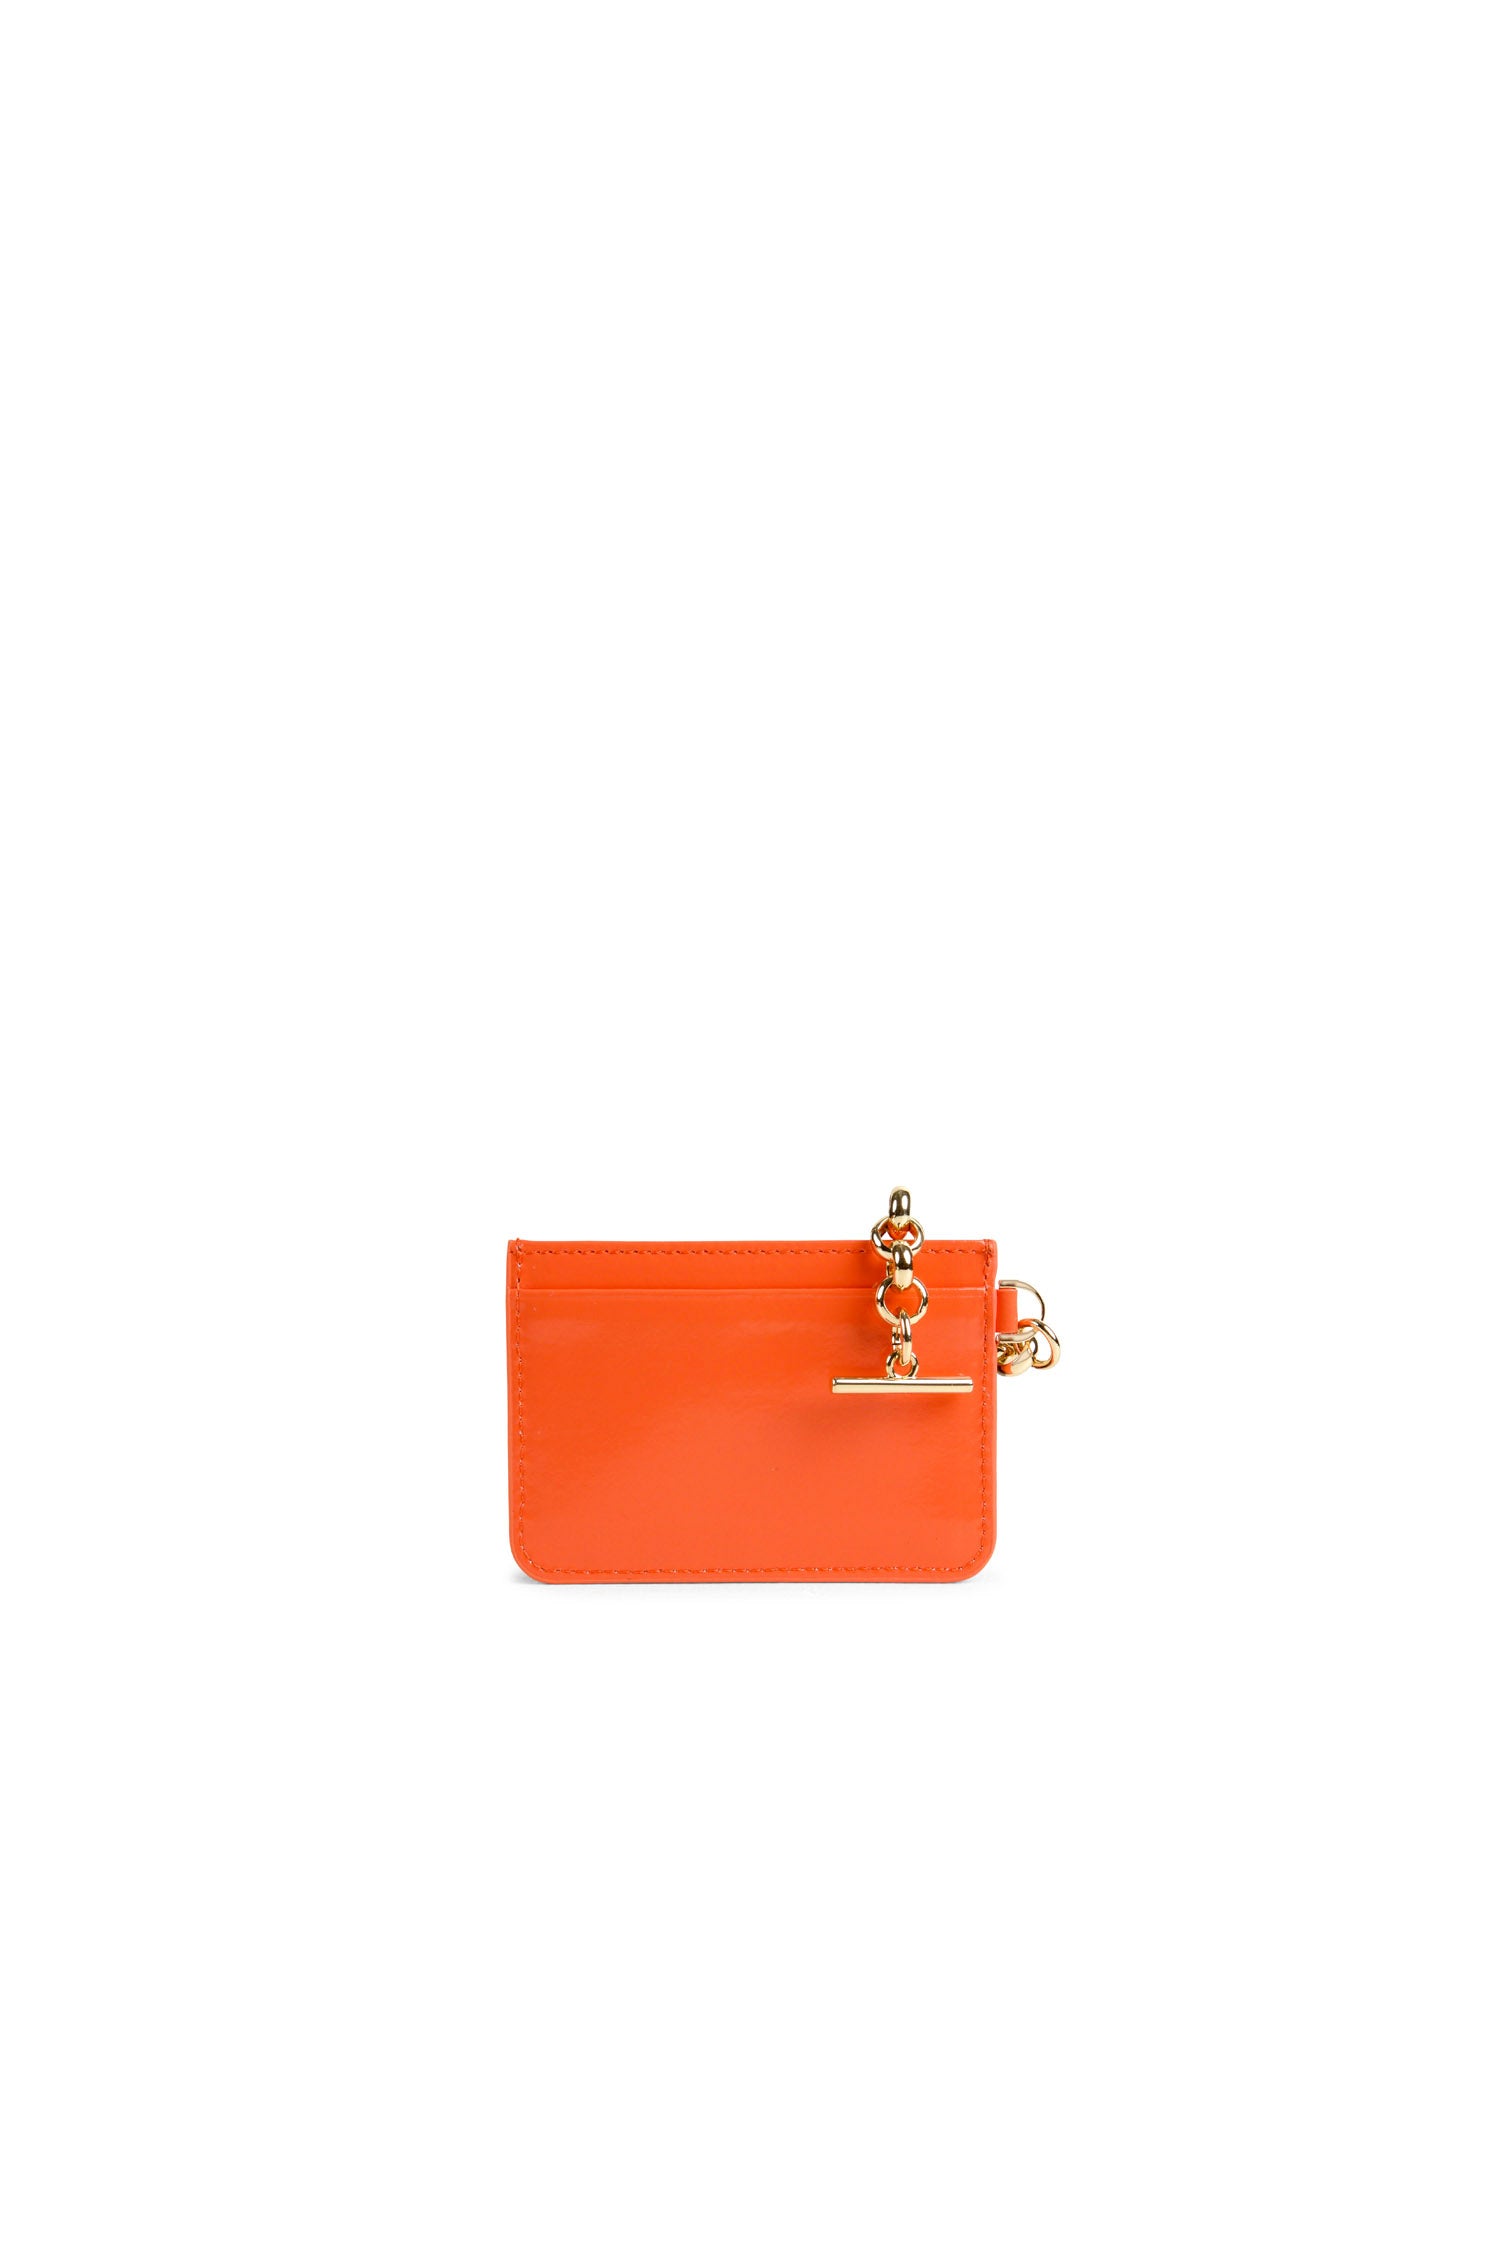 The Yumi Card Holder Orange Sunset - Gift Edit